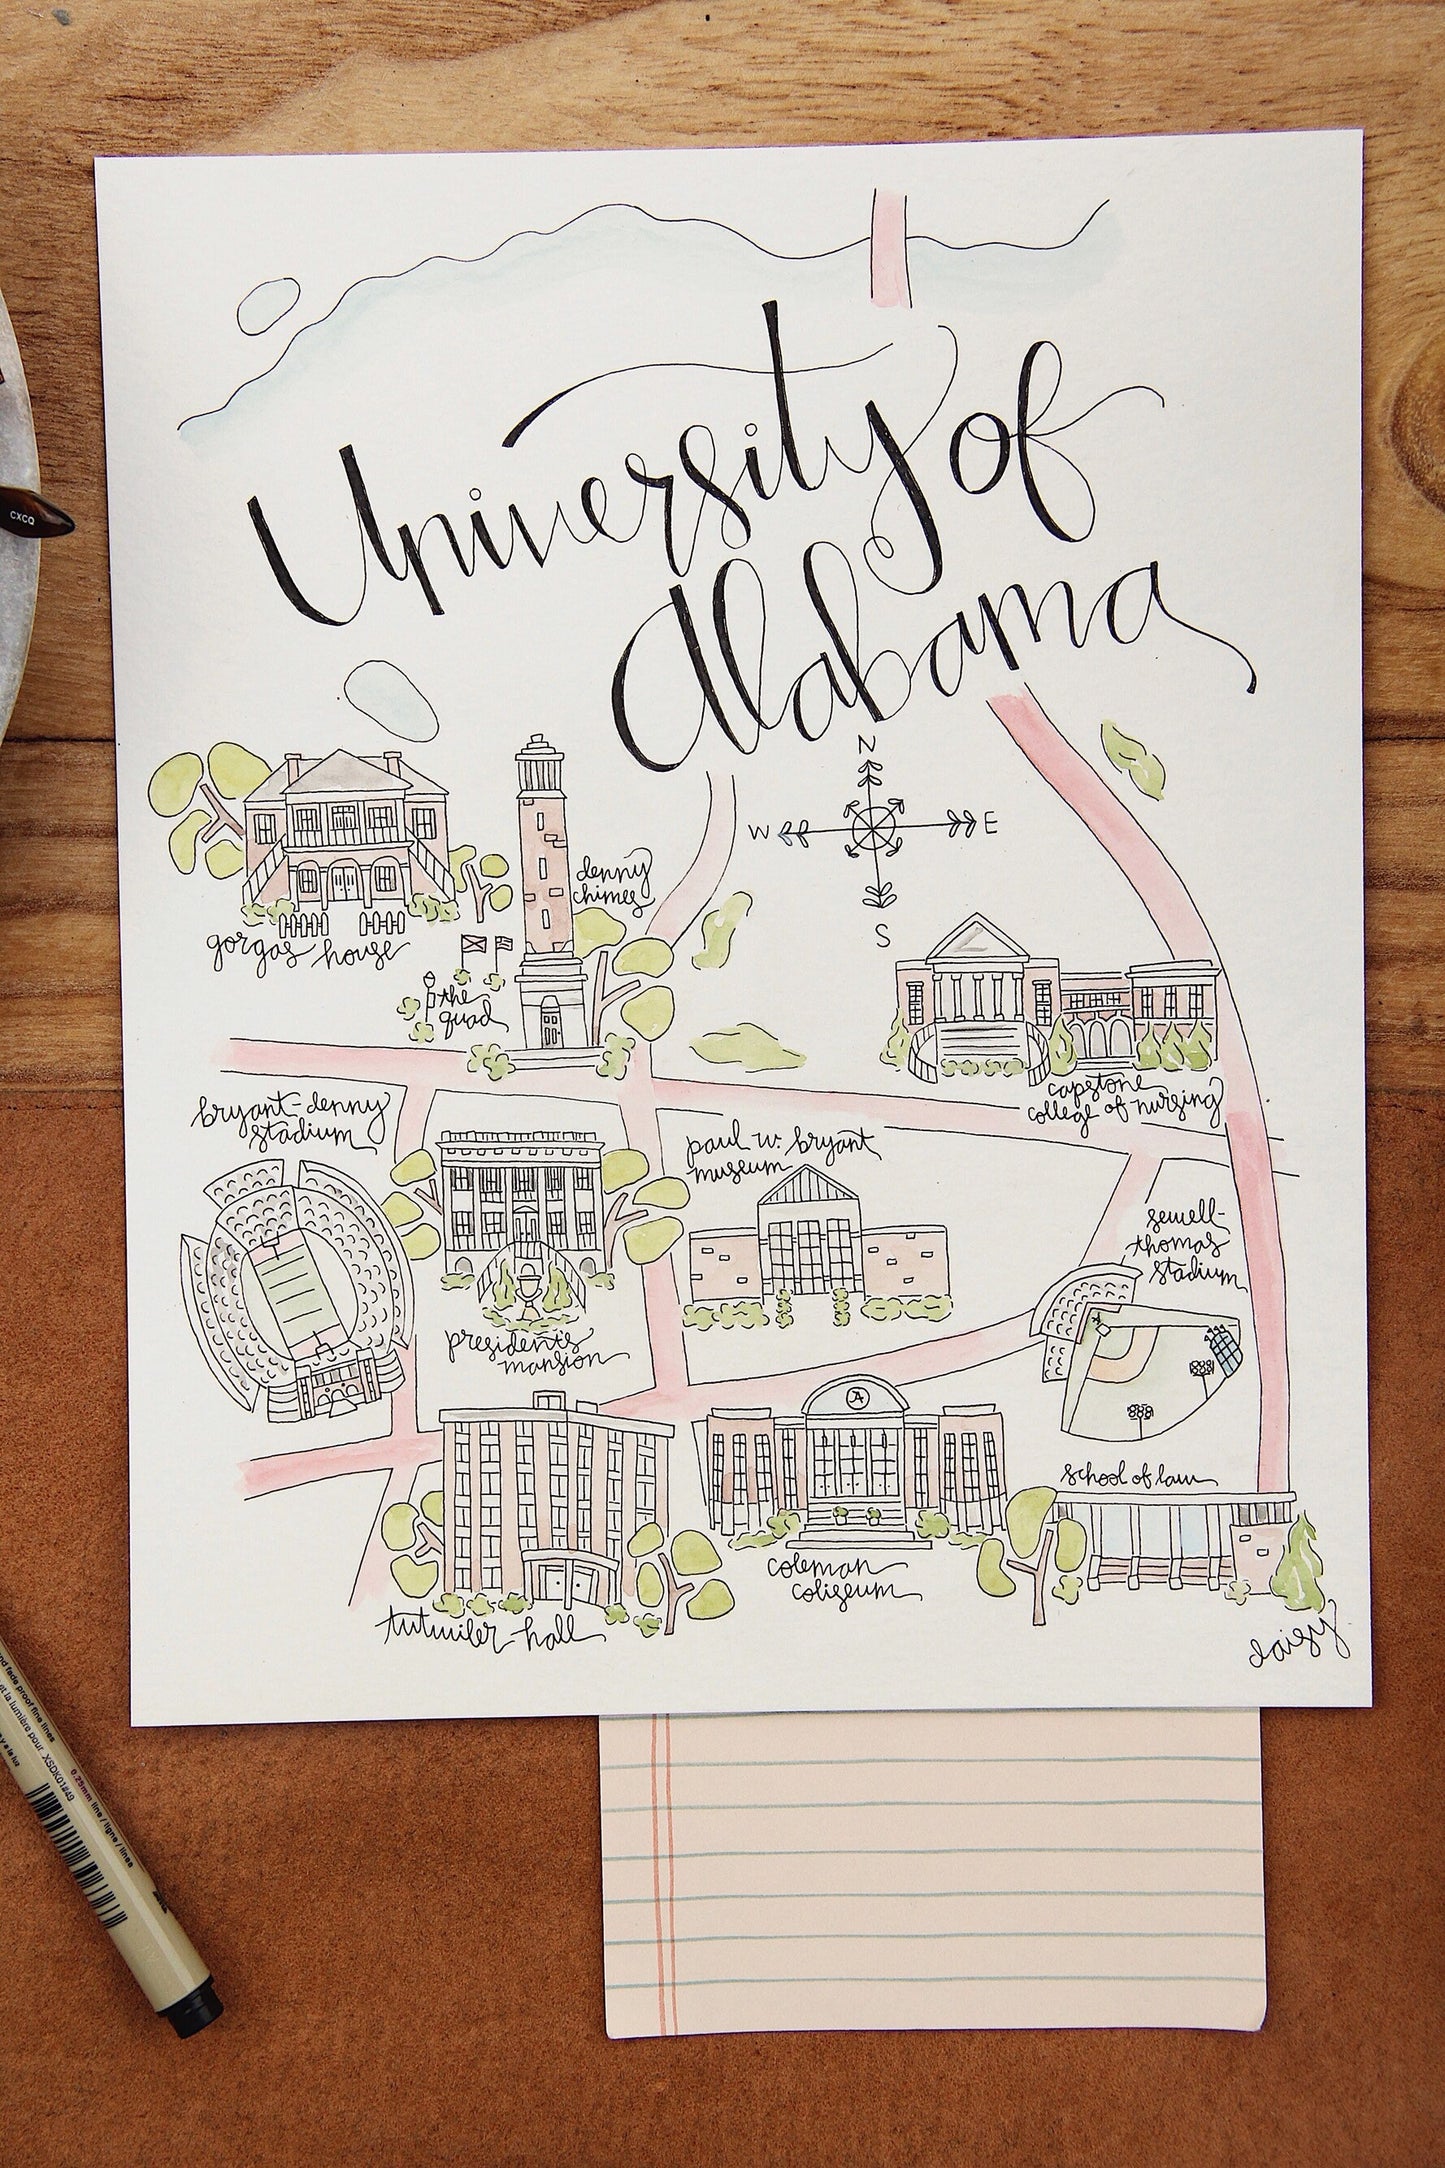 University of Alabama Art Print